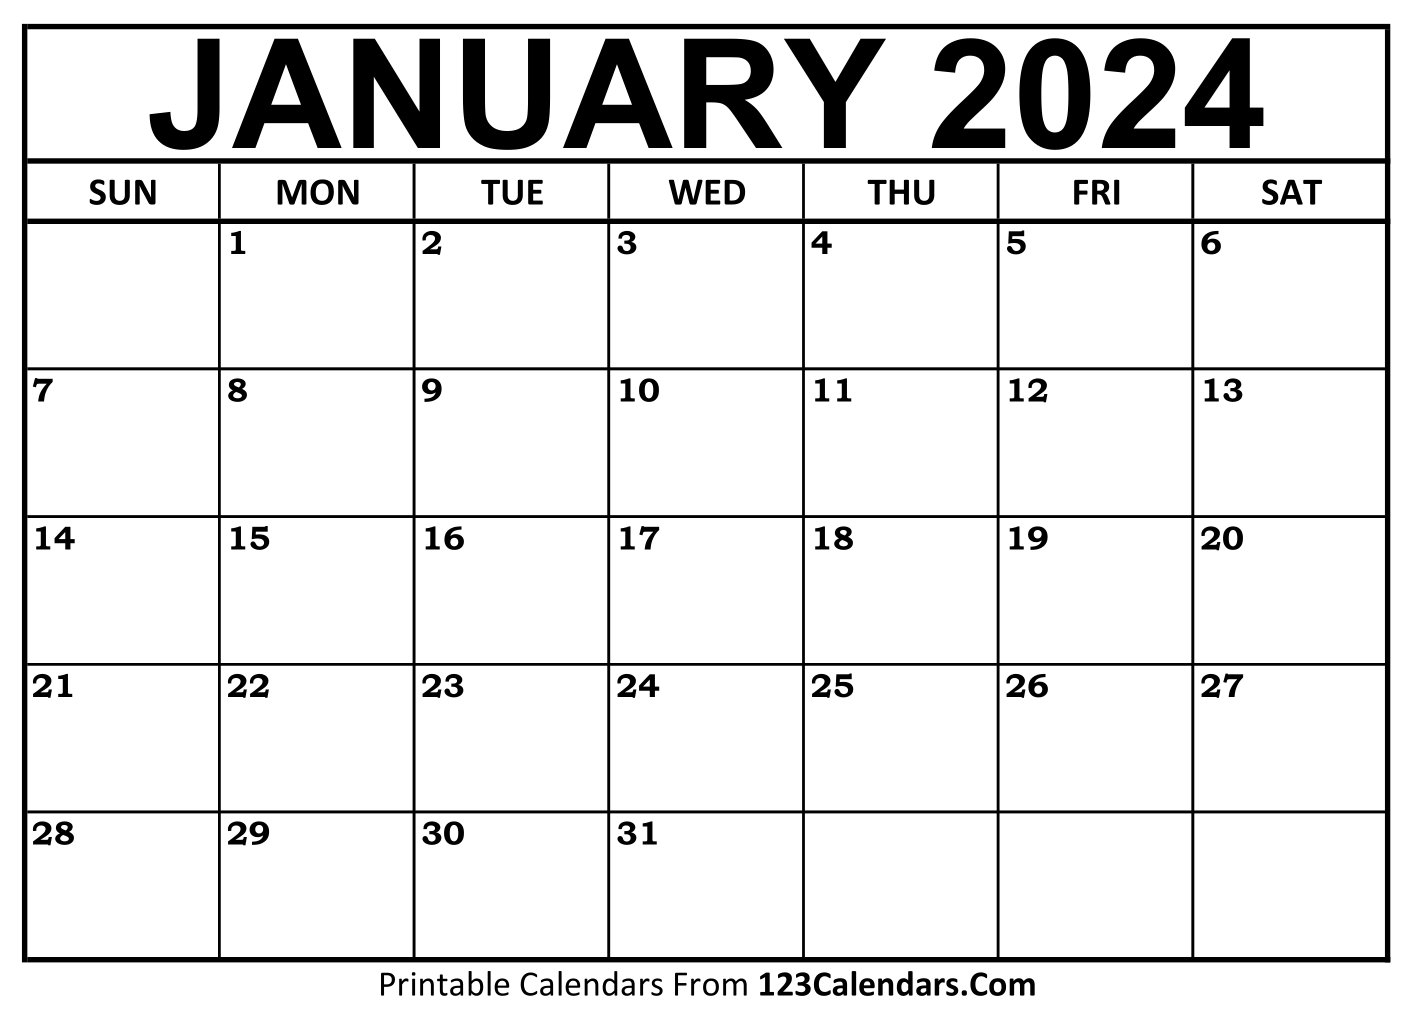 Printable January 2024 Calendar Templates - 123Calendars for Free 2024 January Printable Calendar